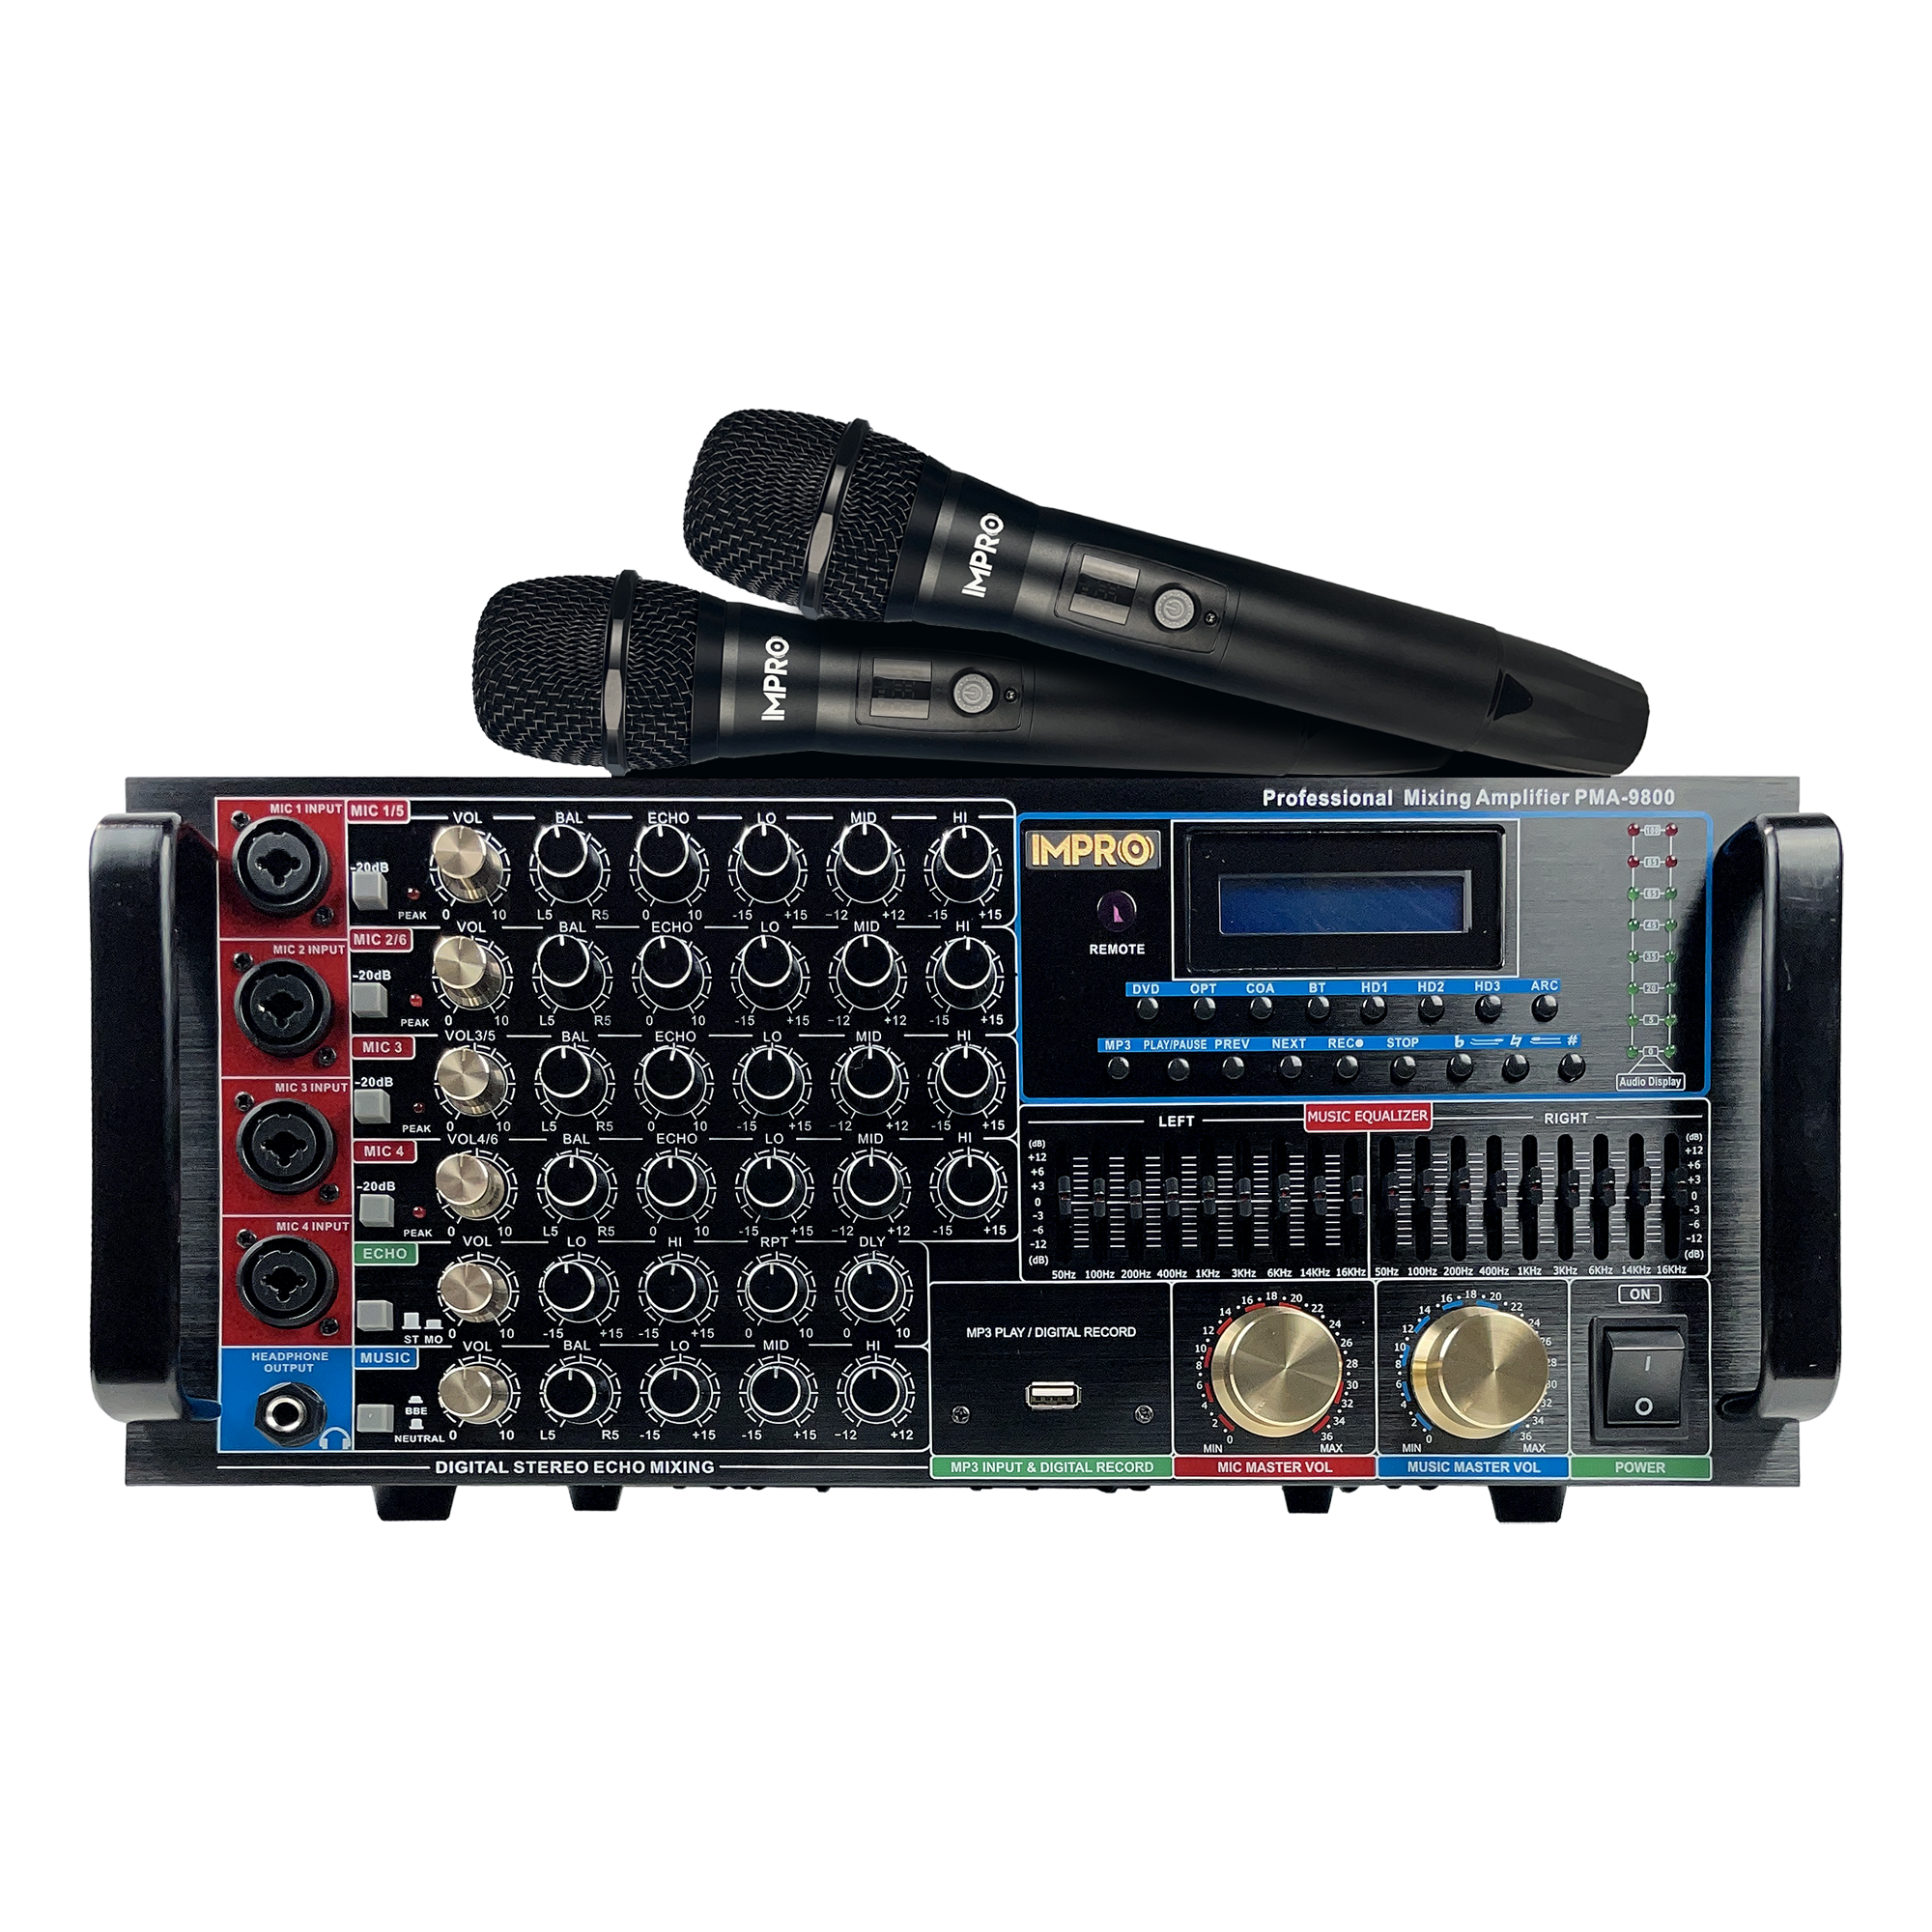 ImPro PMA-9800 1600W Mixing Amplifier Bundle with ImPro UHF-88MXR Wireless Microphones